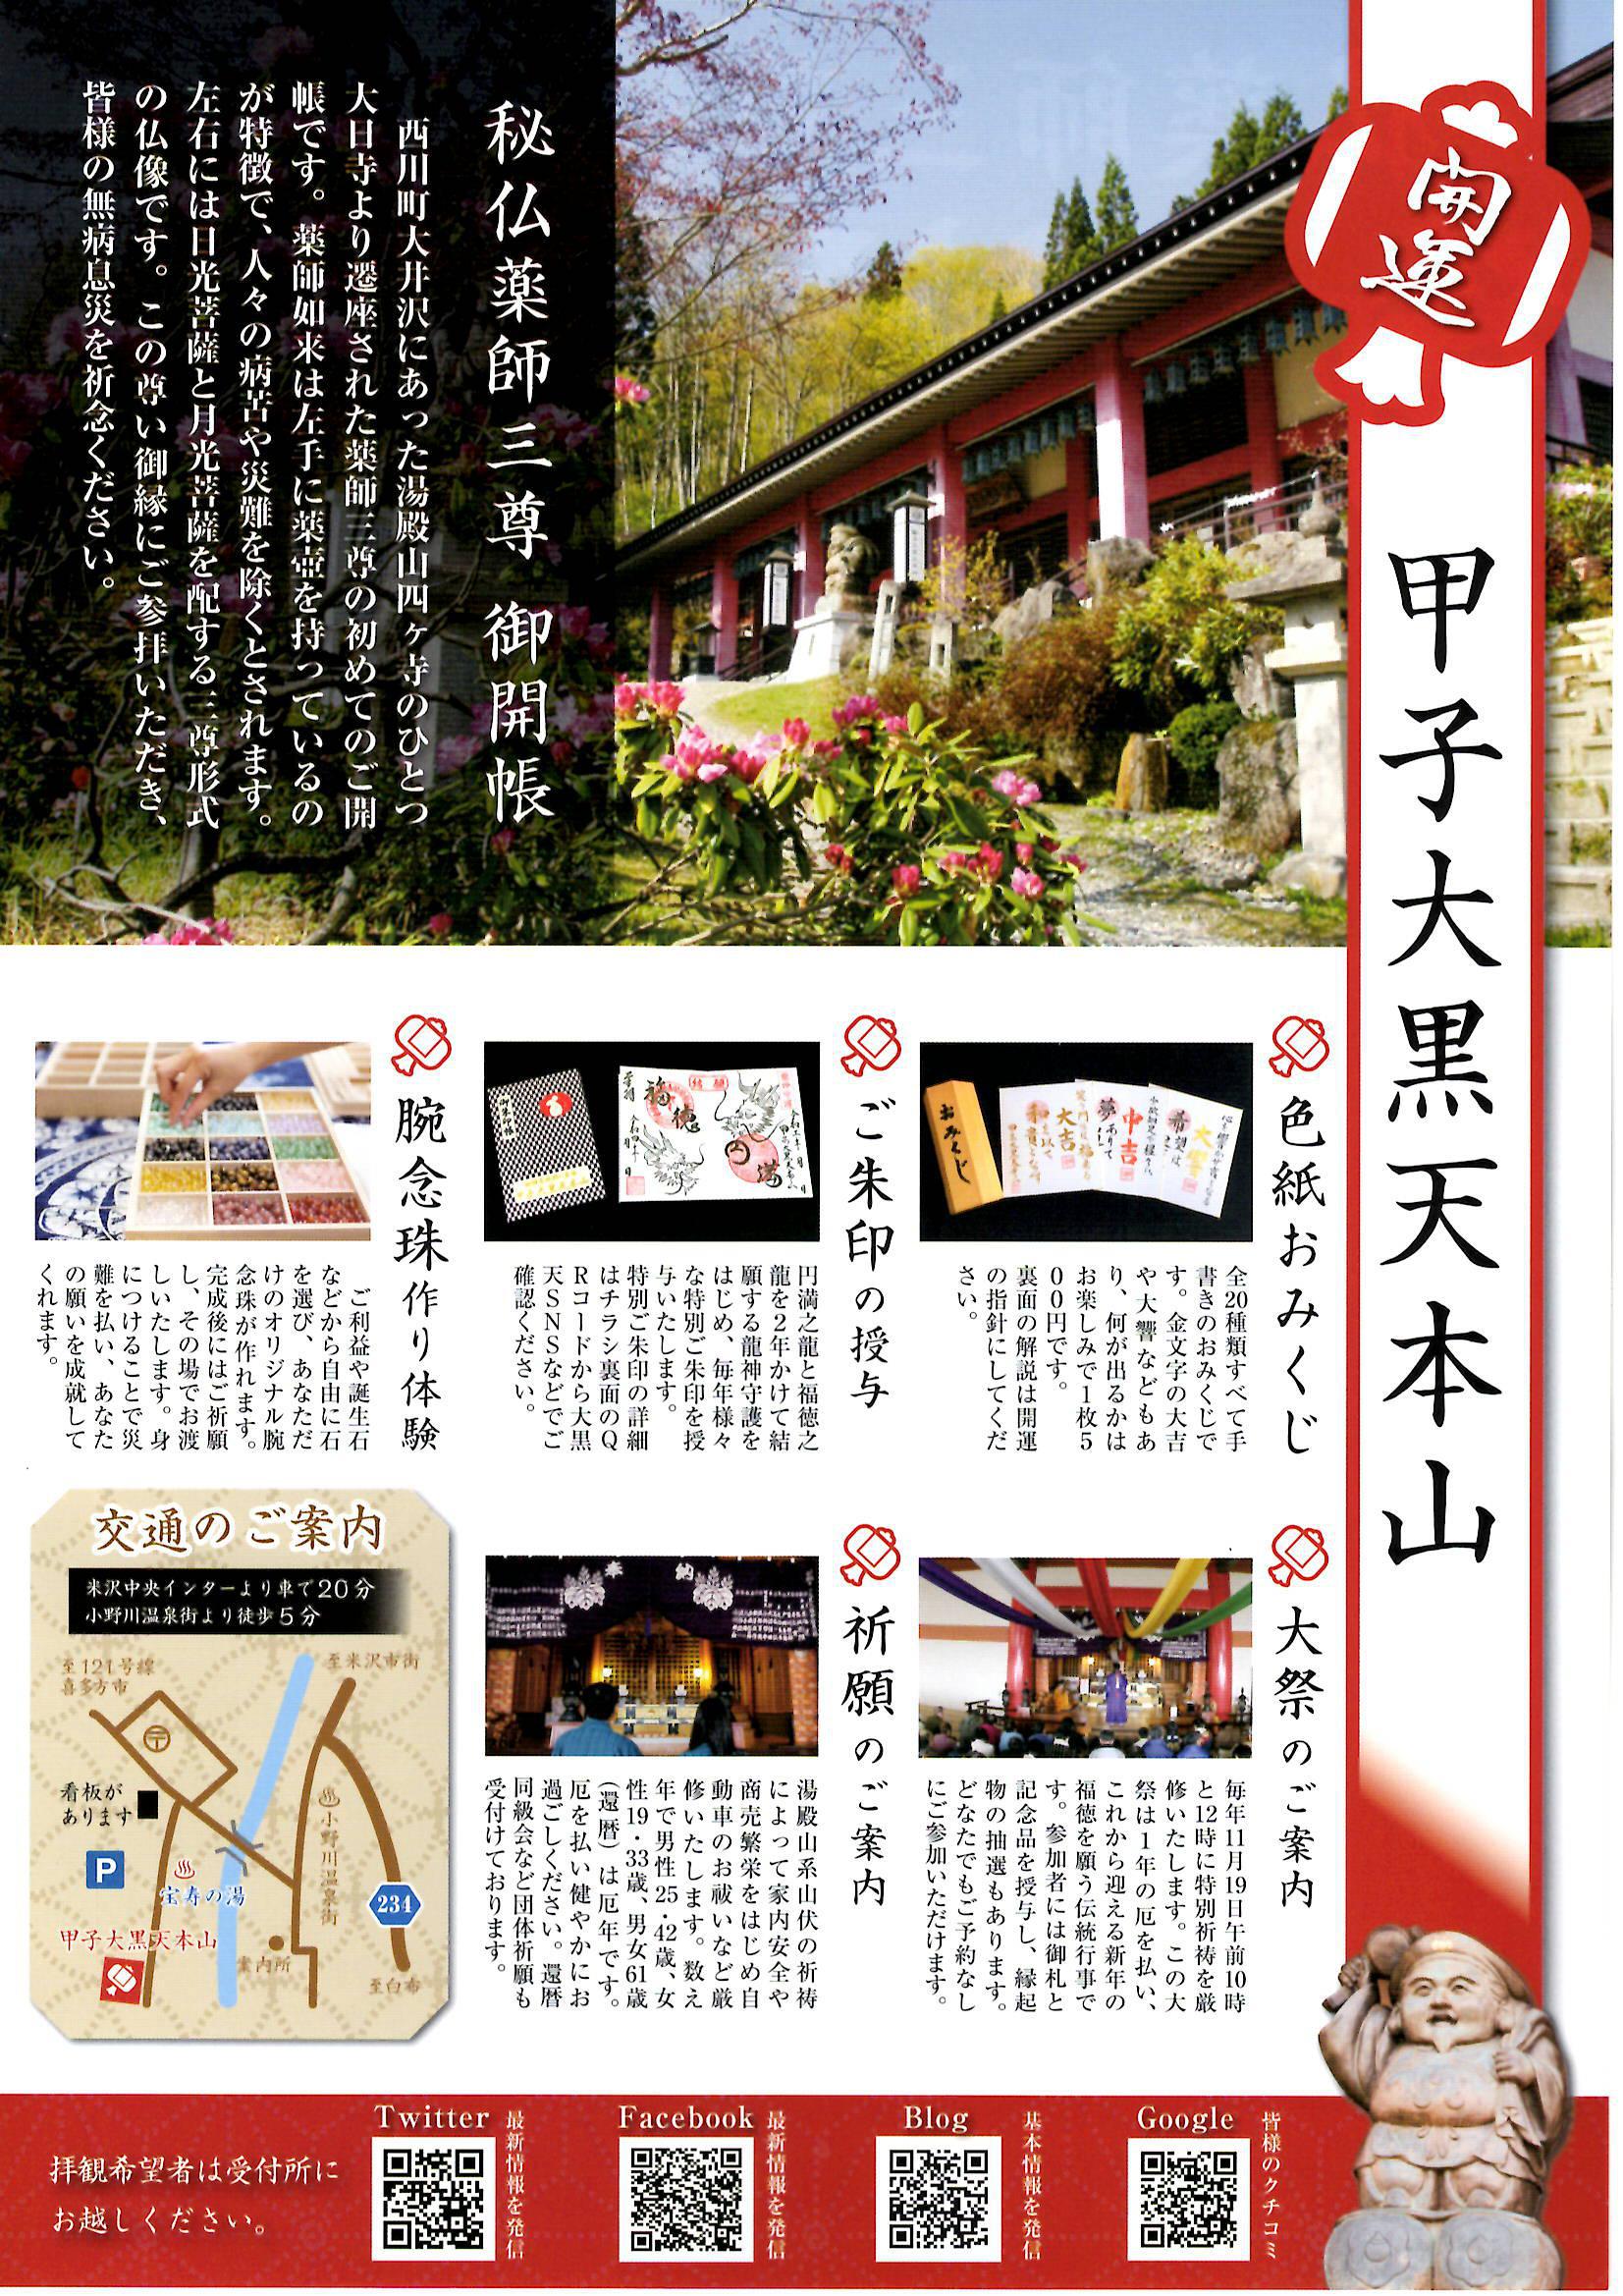 Public Showcase of the Hidden Yakushi Triad at Kinoene Daikokuten Honzan